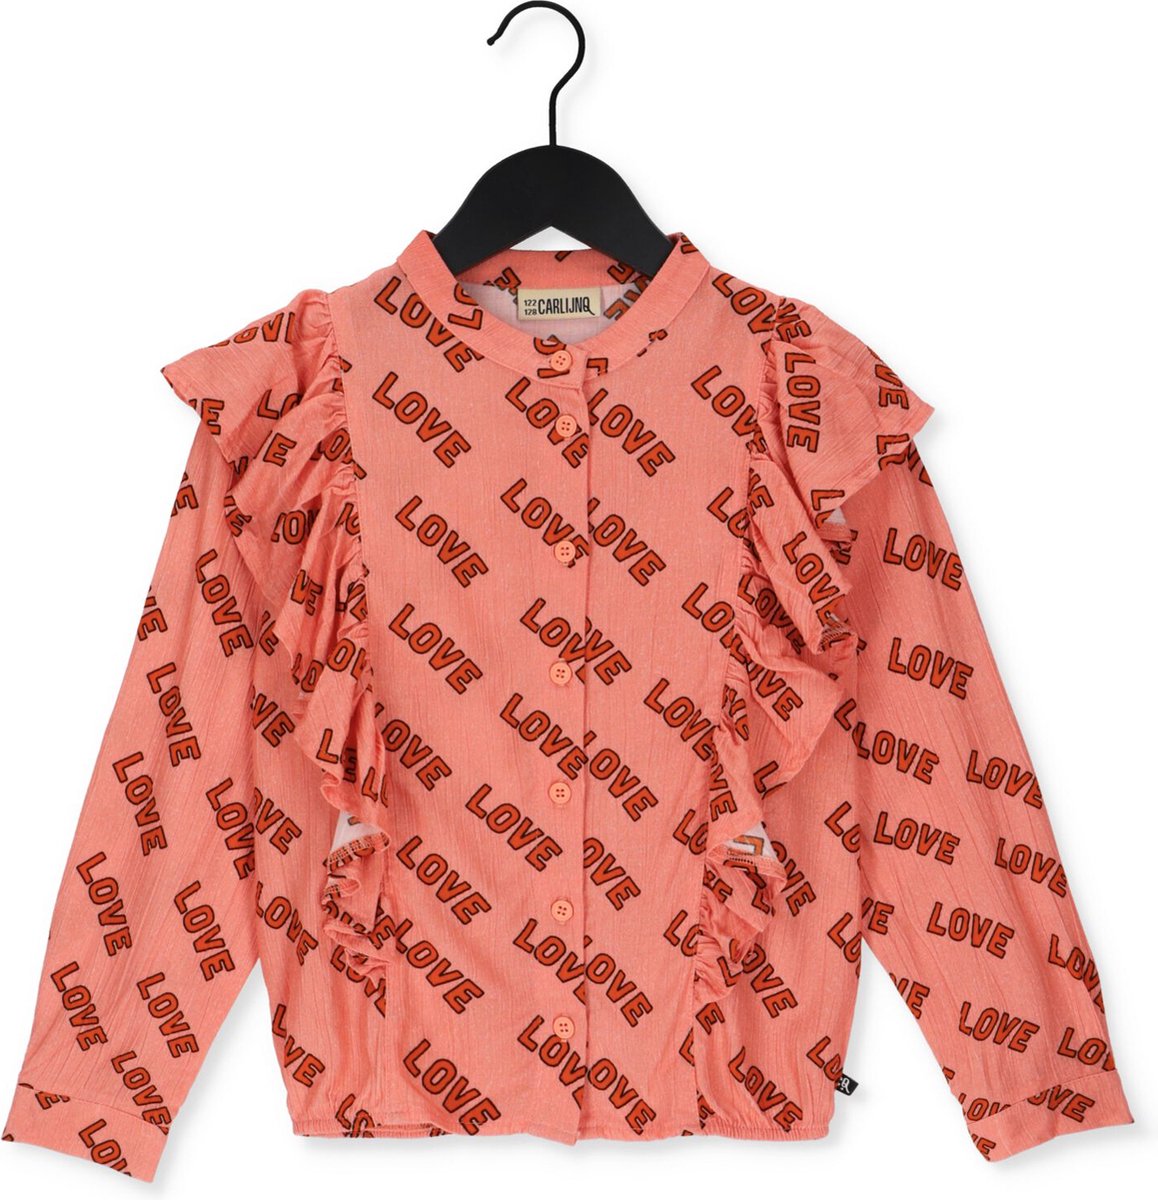 Carlijnq Love - Blouse Ruffled Longsleeve Tops & T-shirts Meisjes - Shirt - Lichtroze - Maat 110/116